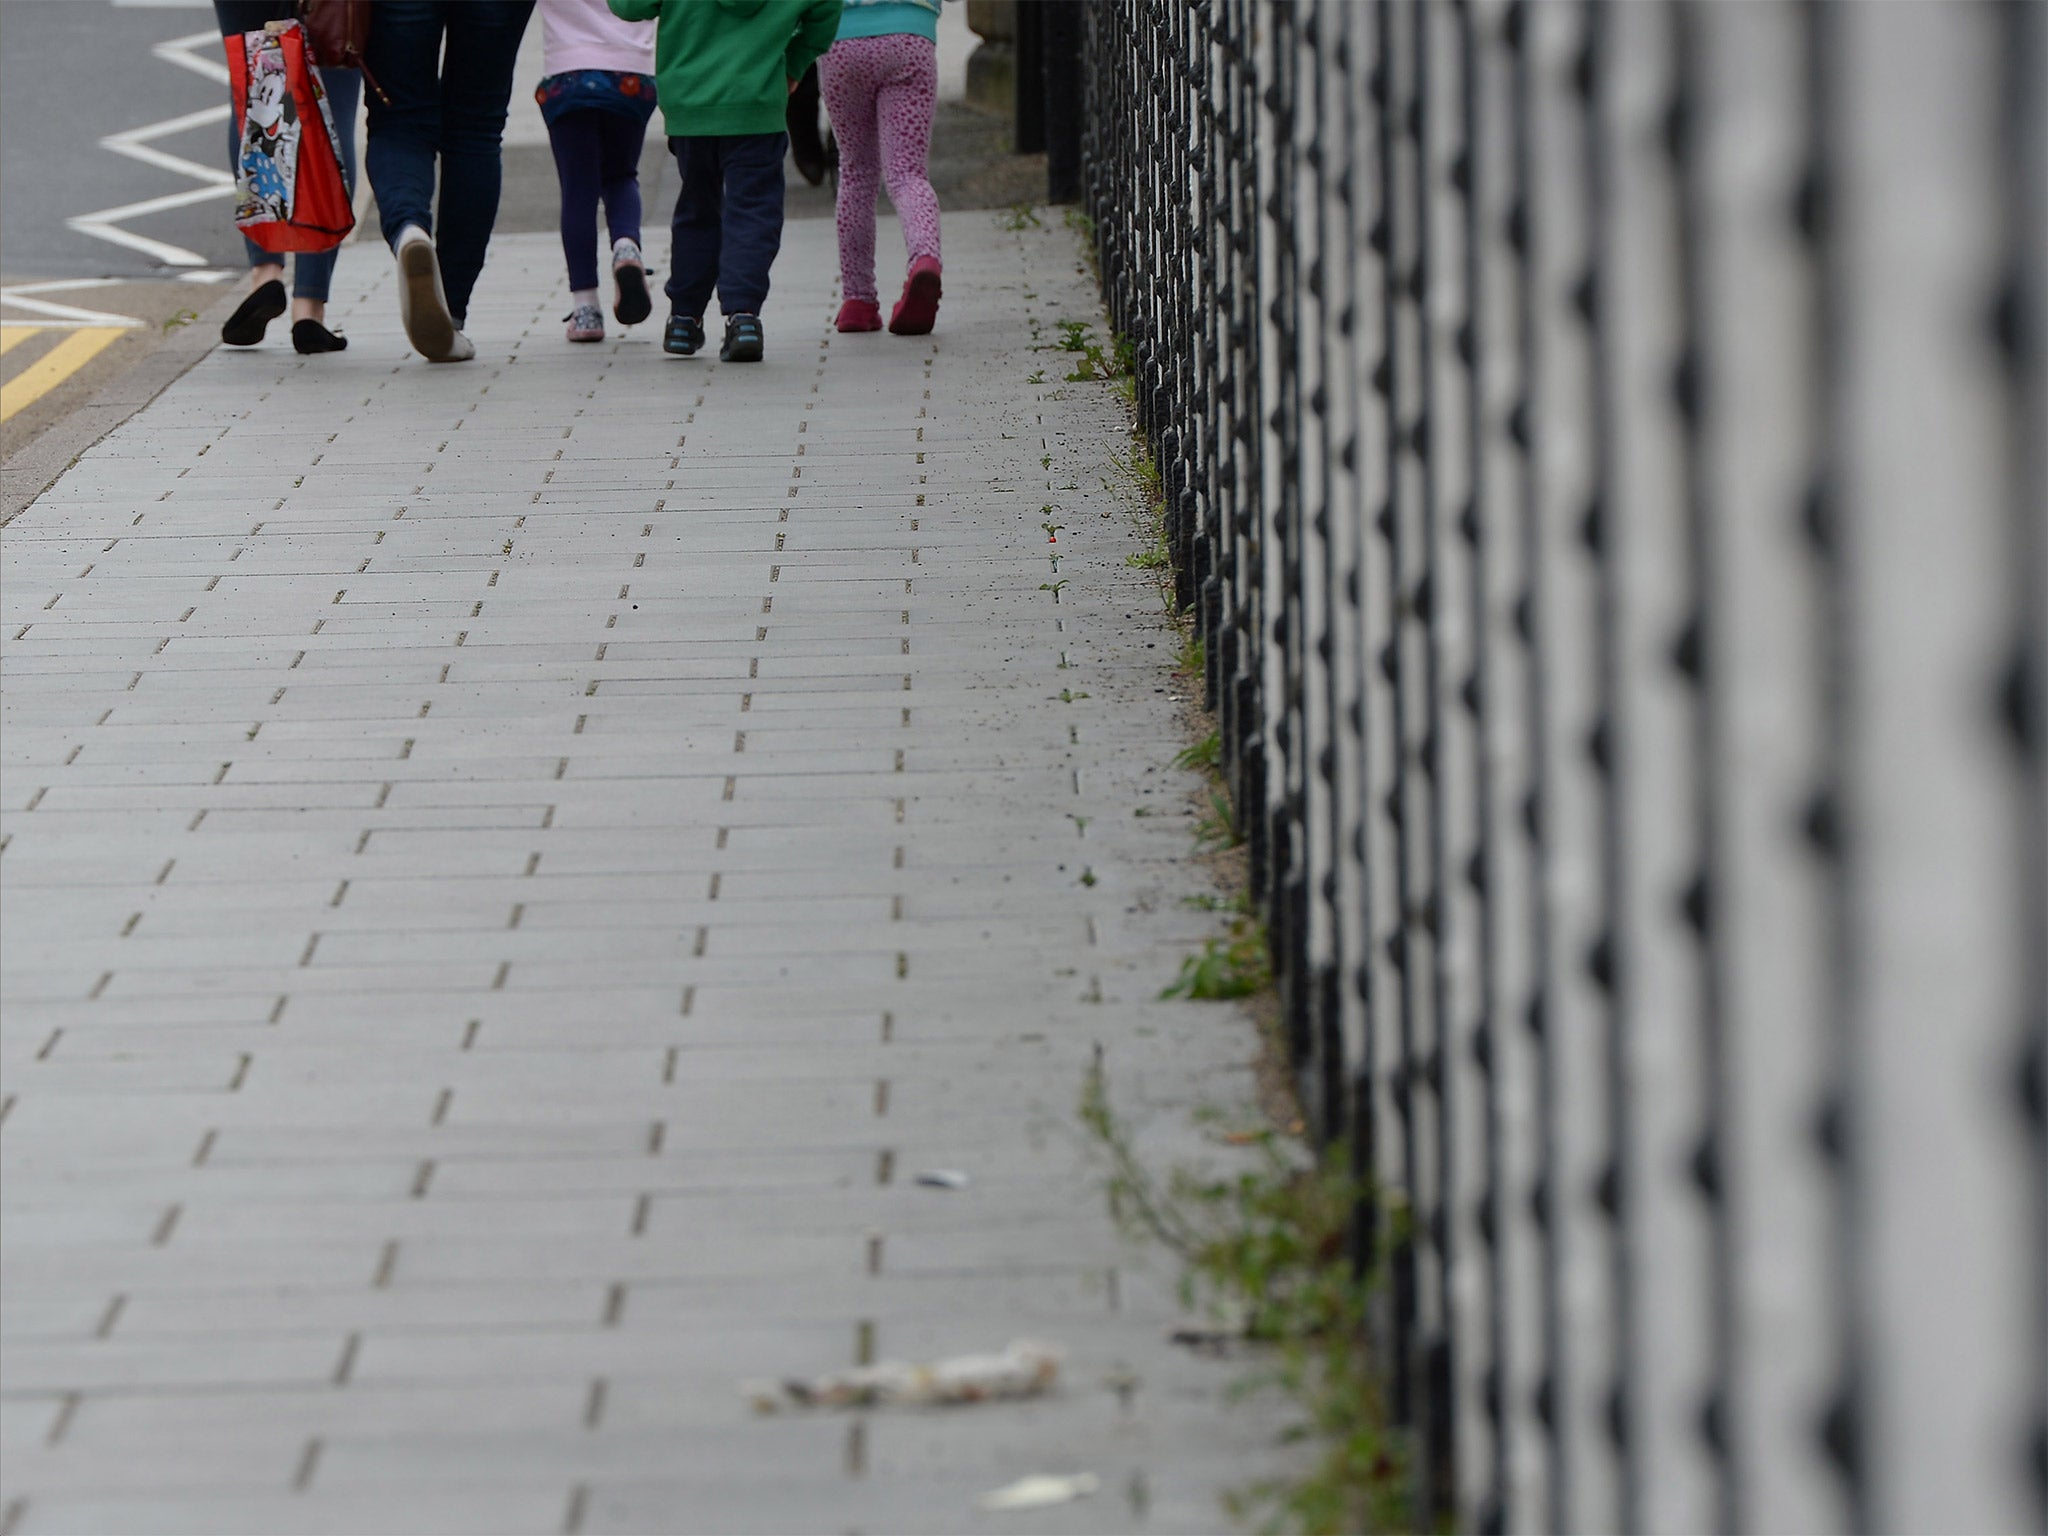 Children walk down a street in Rotherham, South Yorkshire